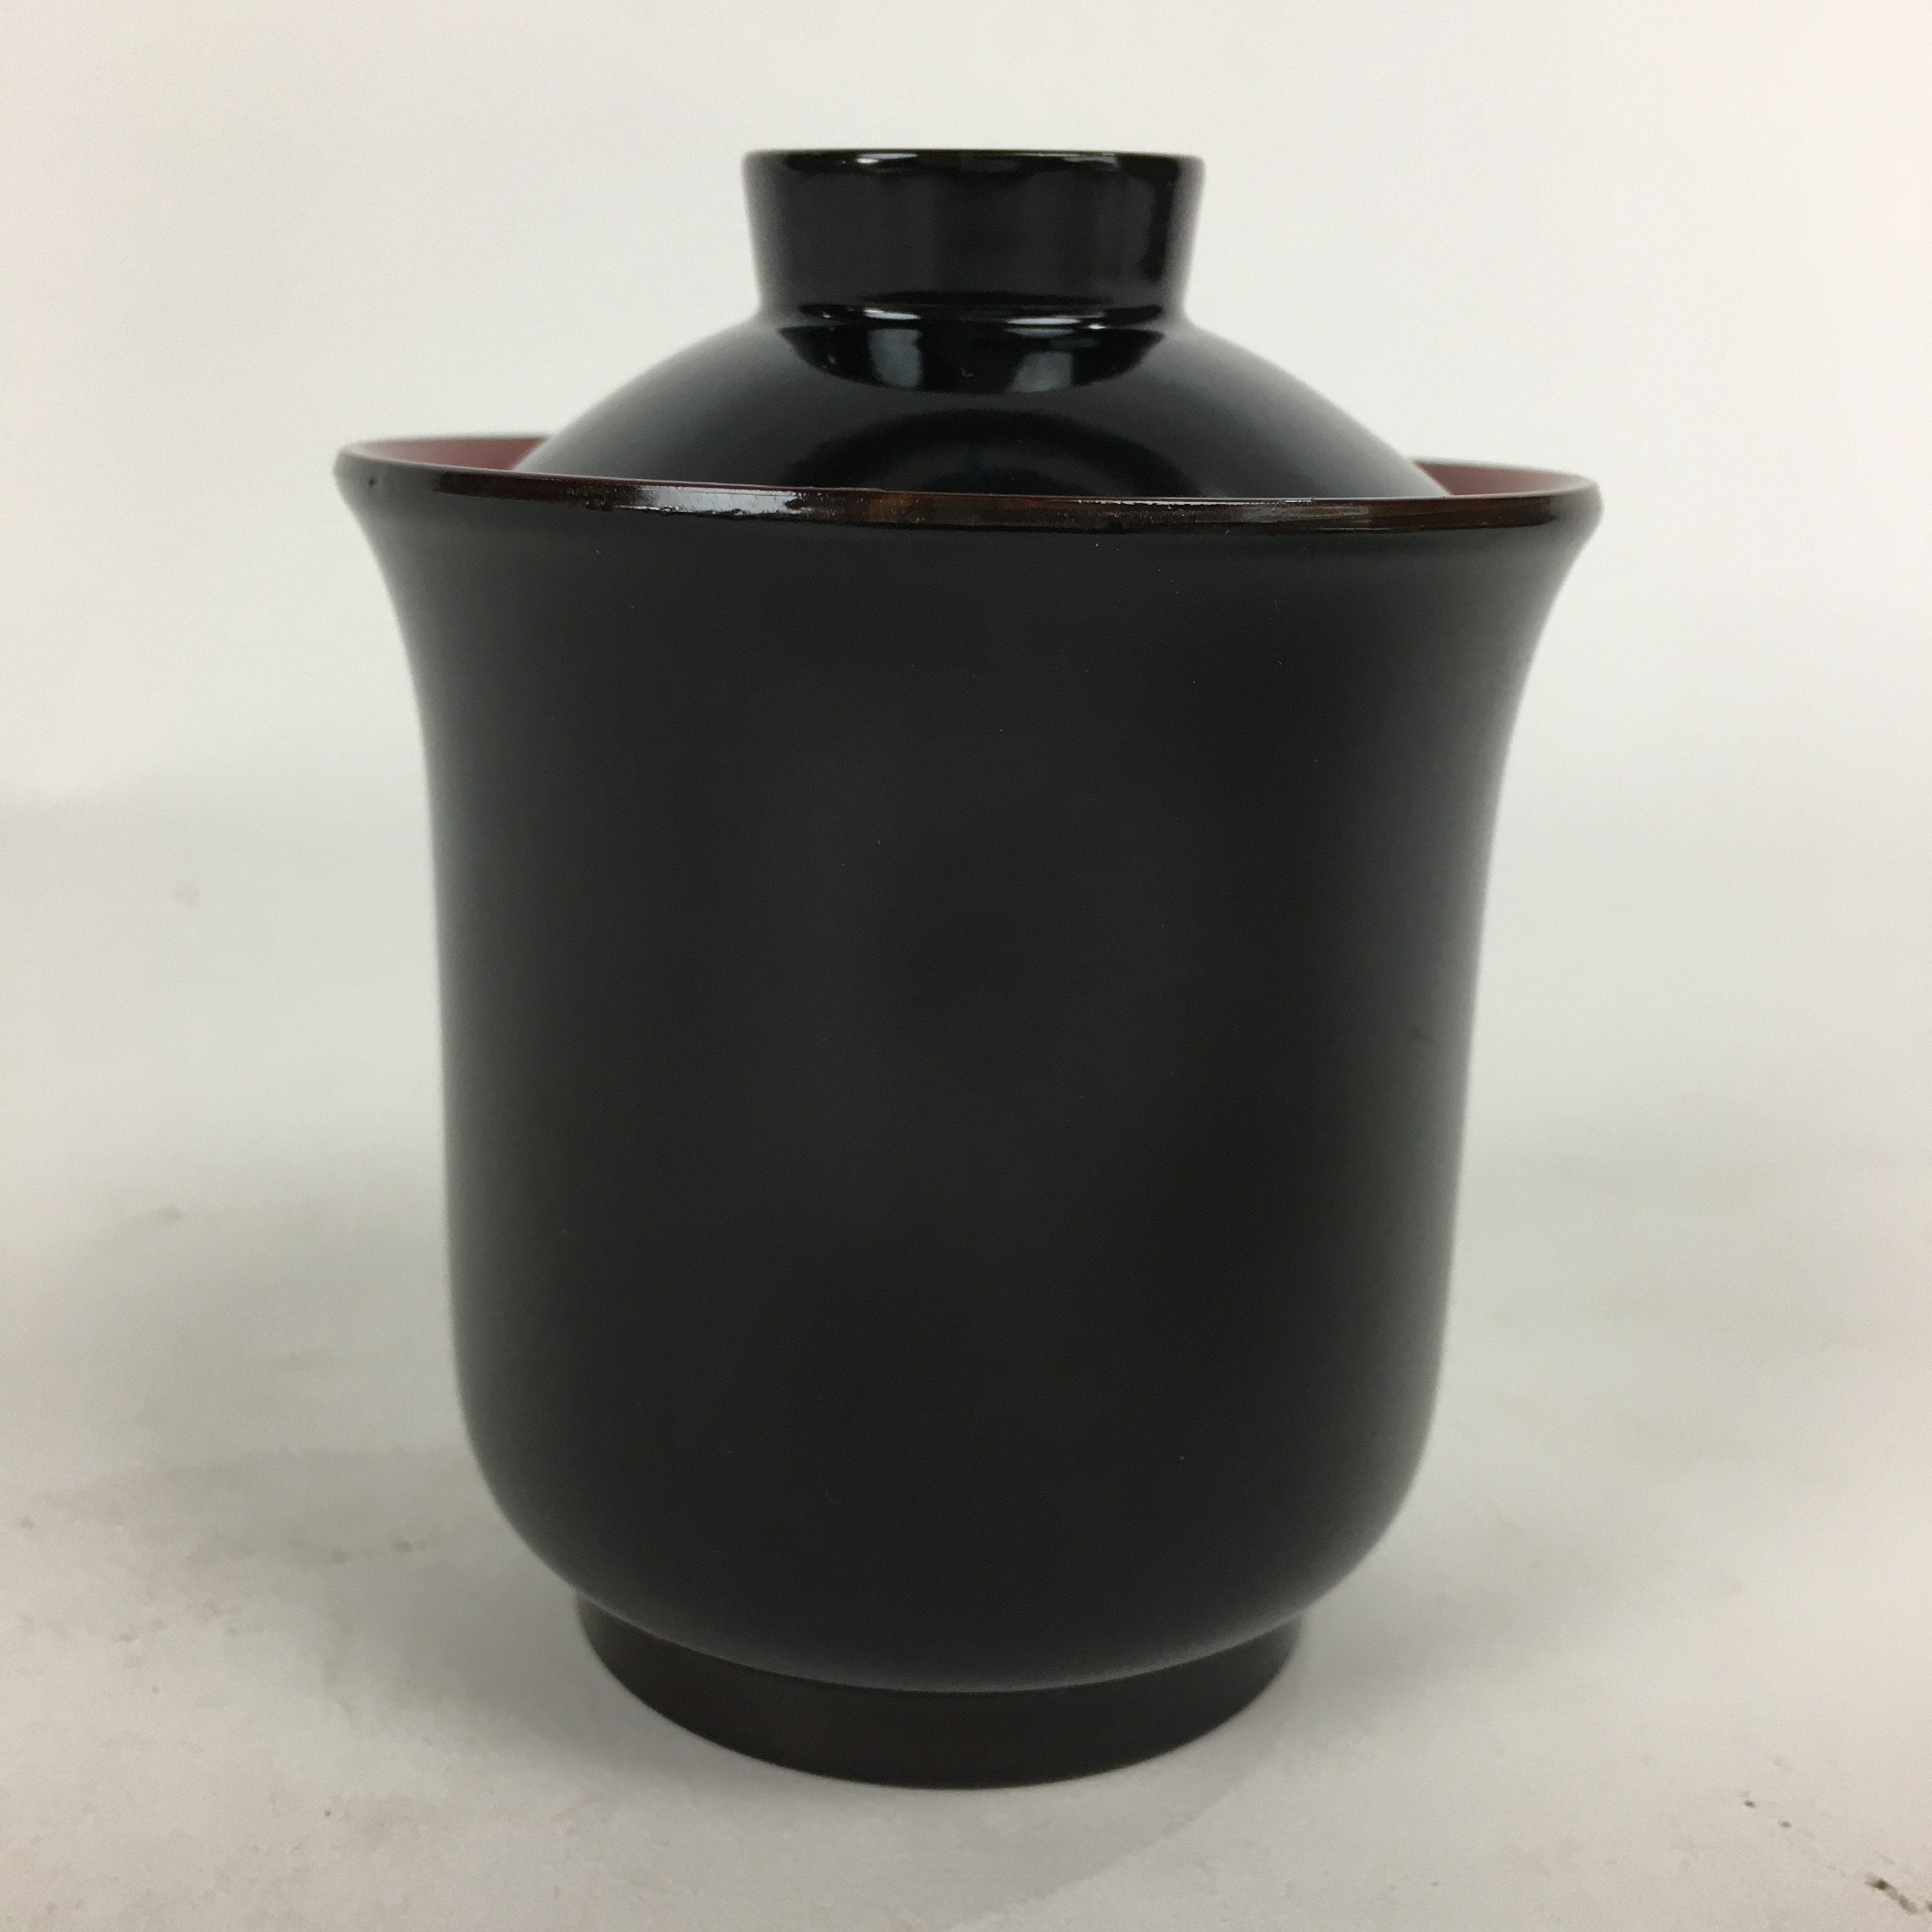 Japanese Lacquerware Kiso-Nuri Lidded Bowl Vtg Red Black Owan Soup Bowl QT146